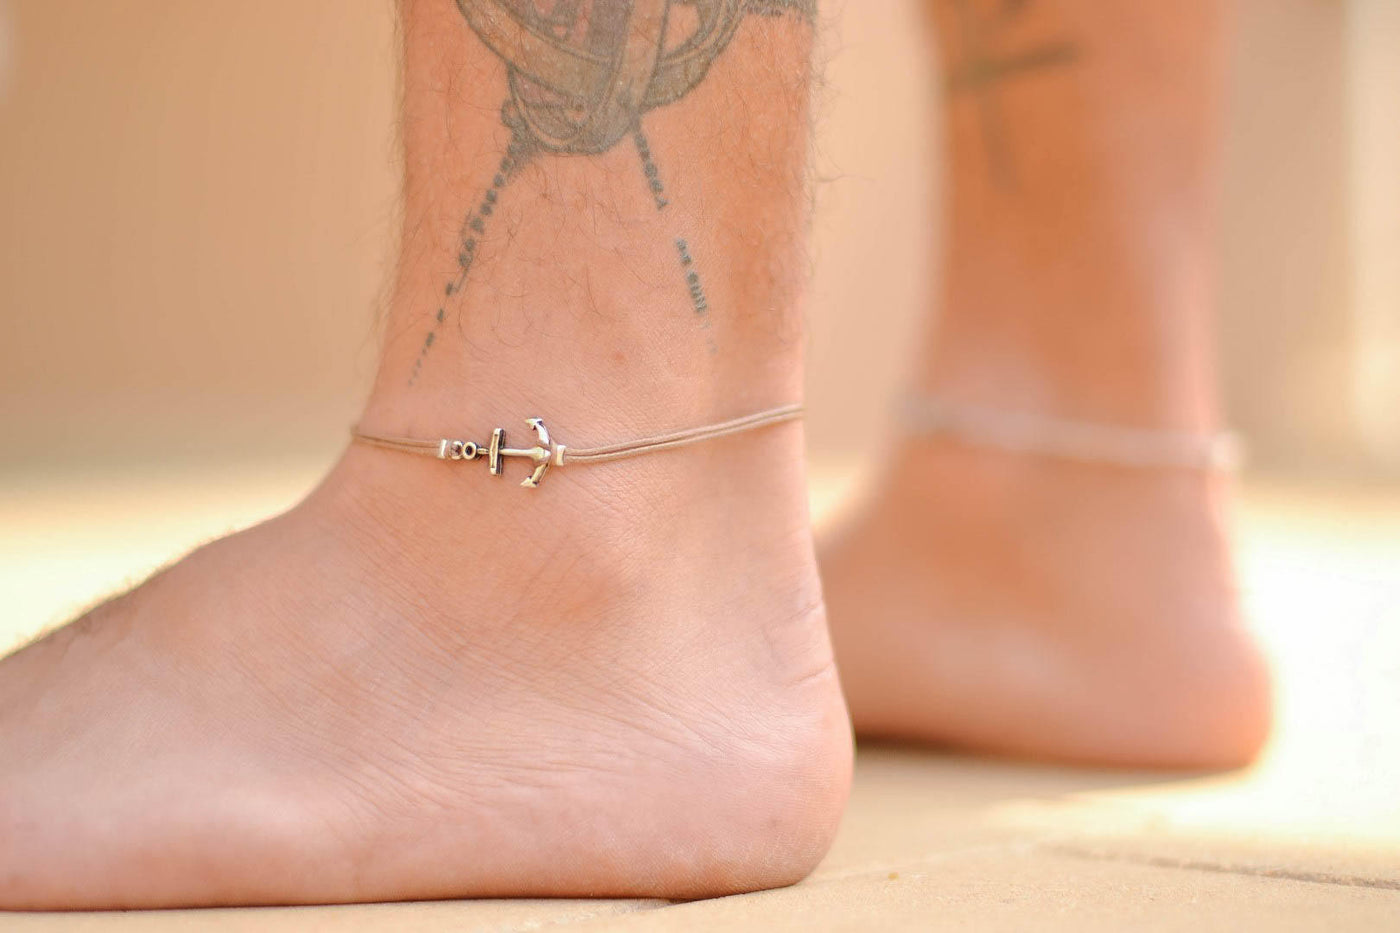 Buy Anklet for Men, Men's Anklet With Silver Star of David, Black Cord,  Anklet for Men, Gift for Him, Ankle Bracelet, Jewish Jewelry Form Israel  Online in India - Etsy